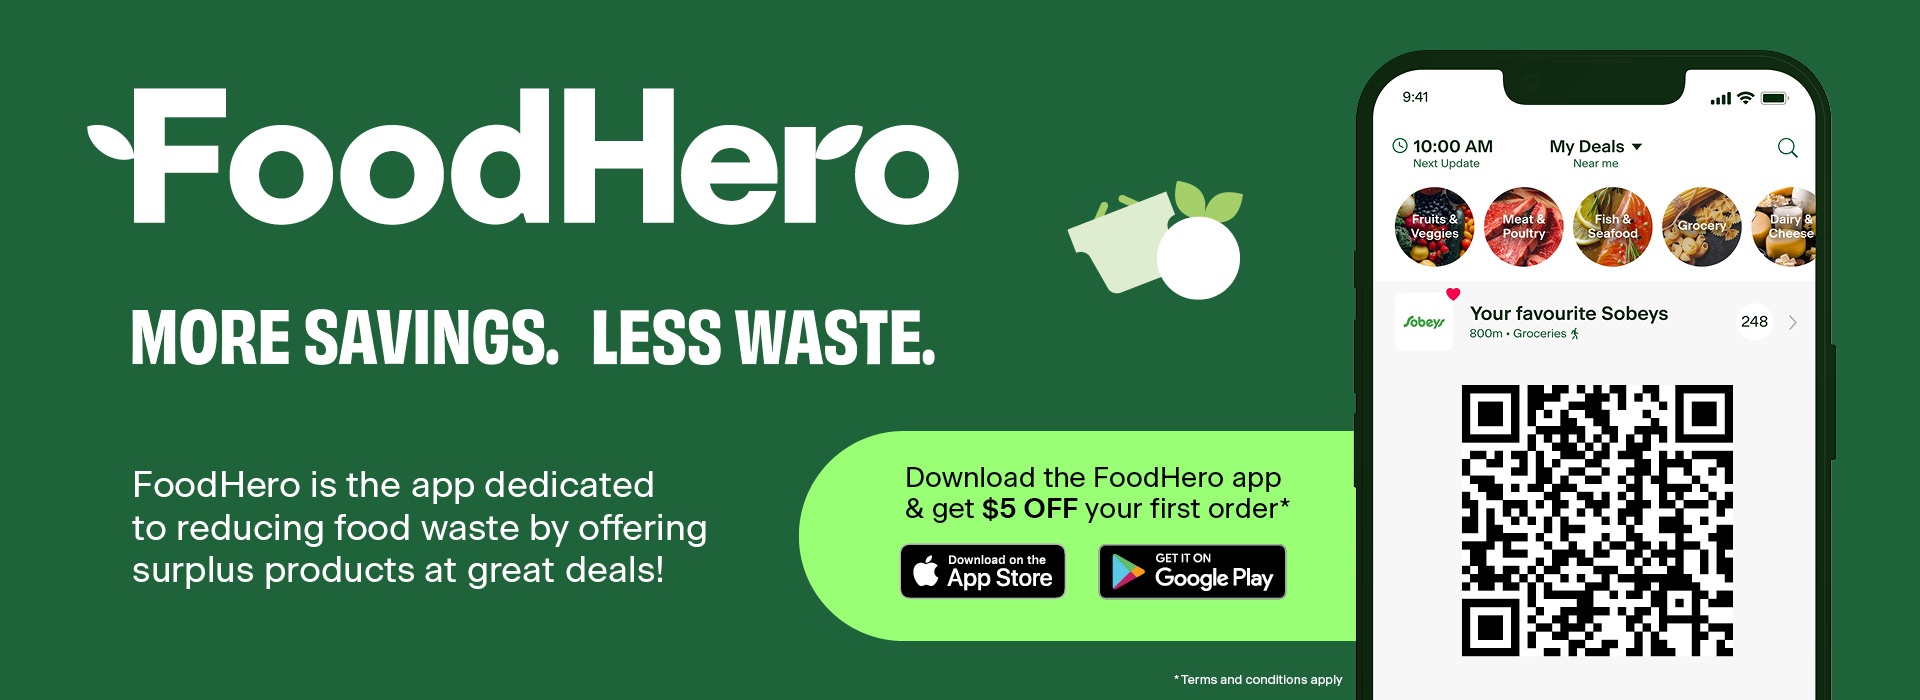 FoodHero - More Savings. Less Waste. FoodHero is the app dedicated to reducing food waste by offering surplus products at great deals!